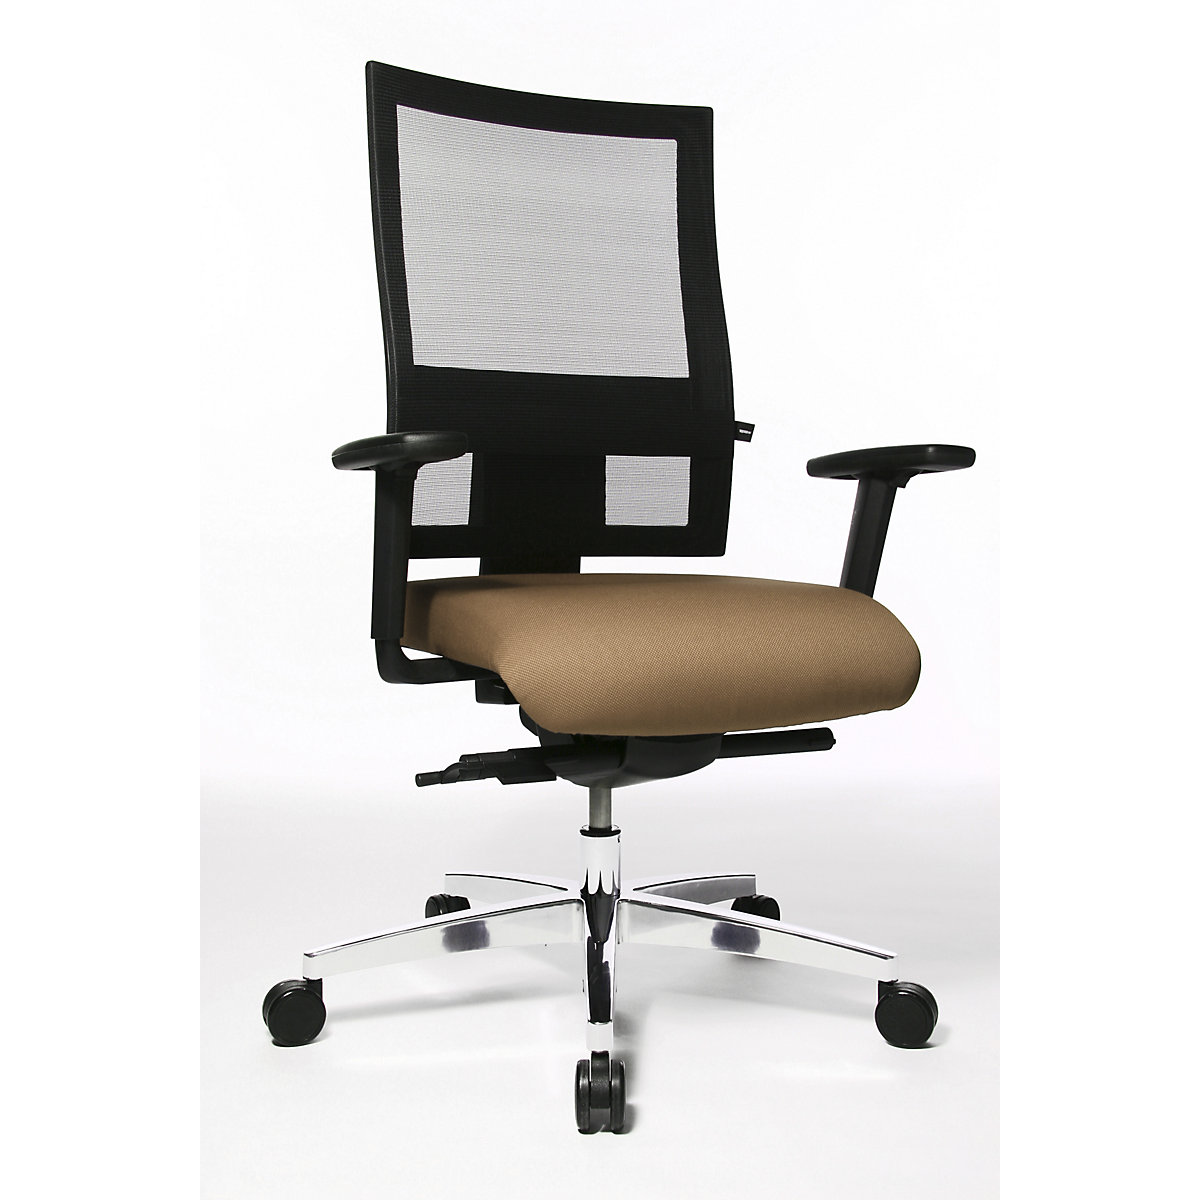 PROFI NET 11 office swivel chair – Topstar